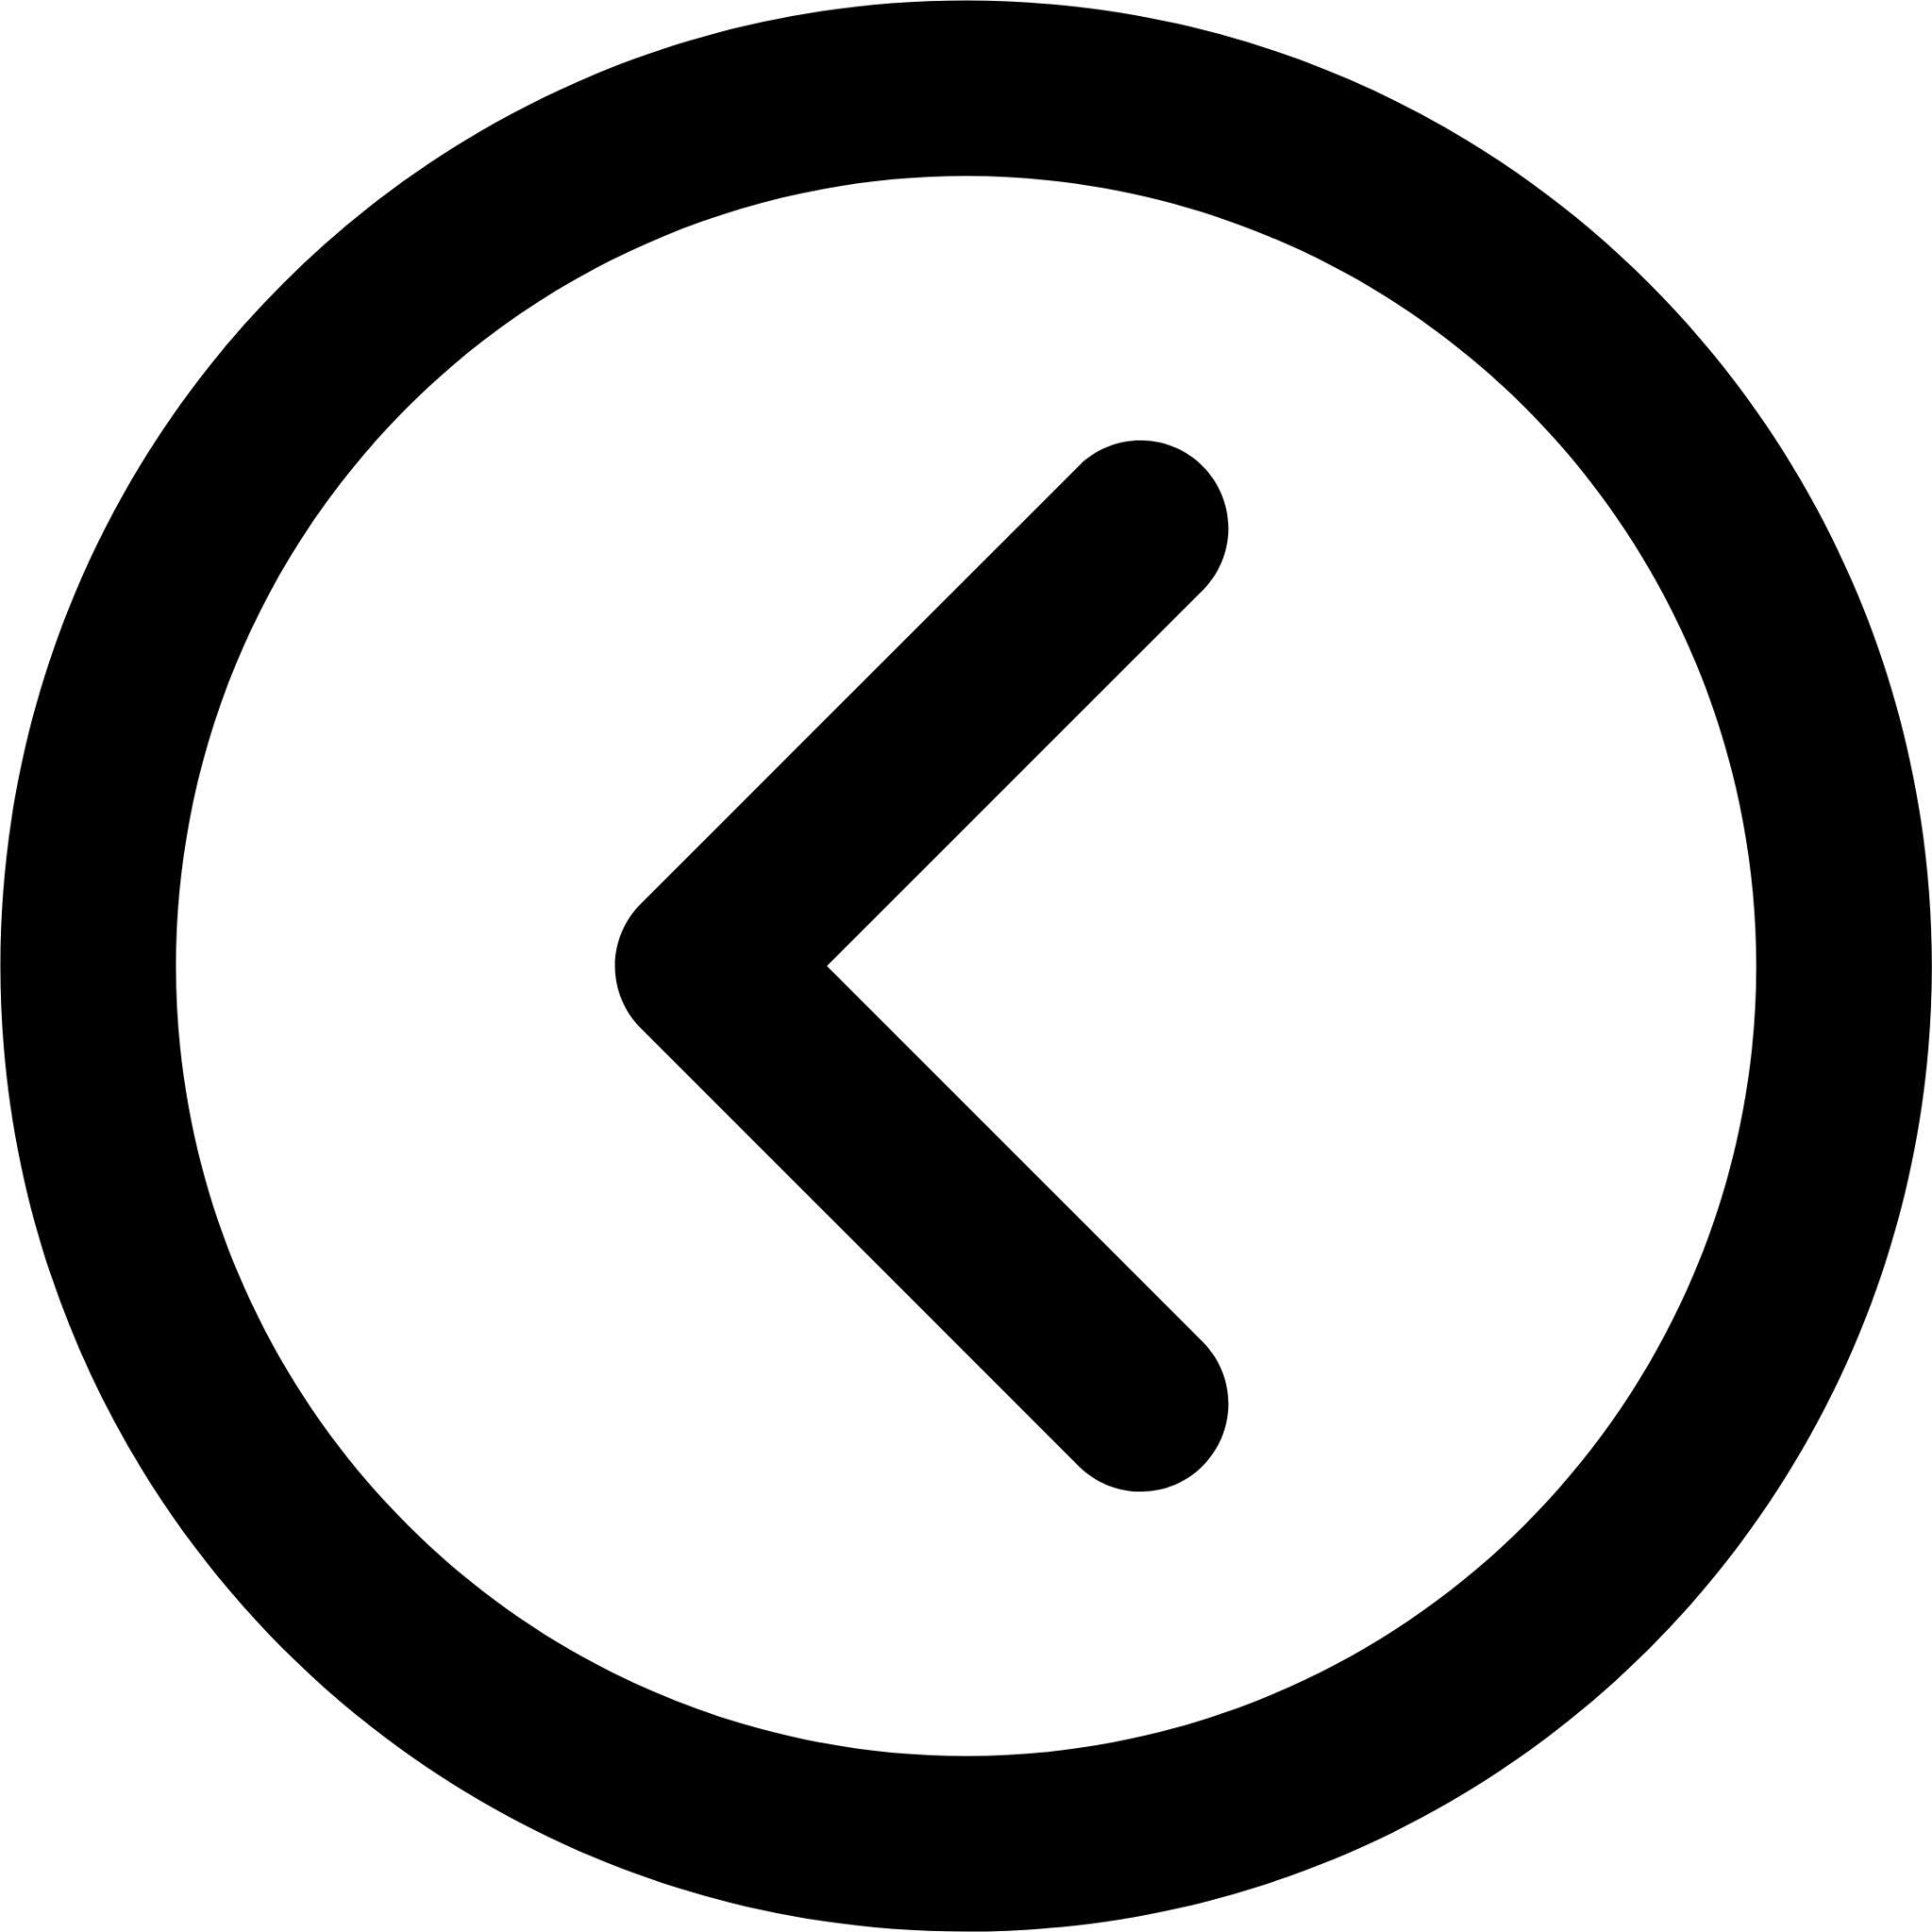 circled left chevron icon